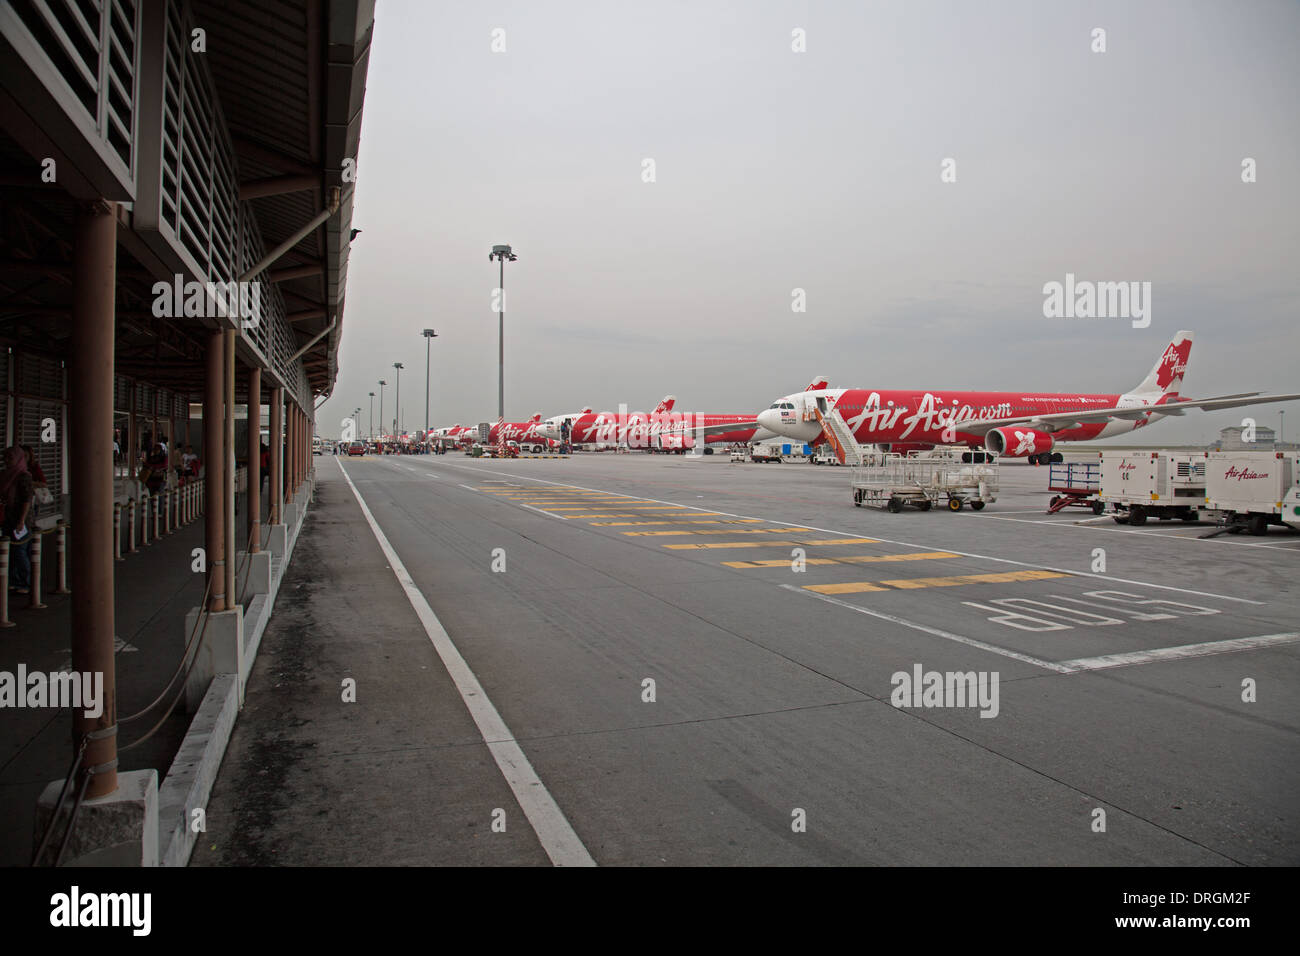 Air Asia airplanes on the runway at Kuala Lumpur Airport Stock Photo